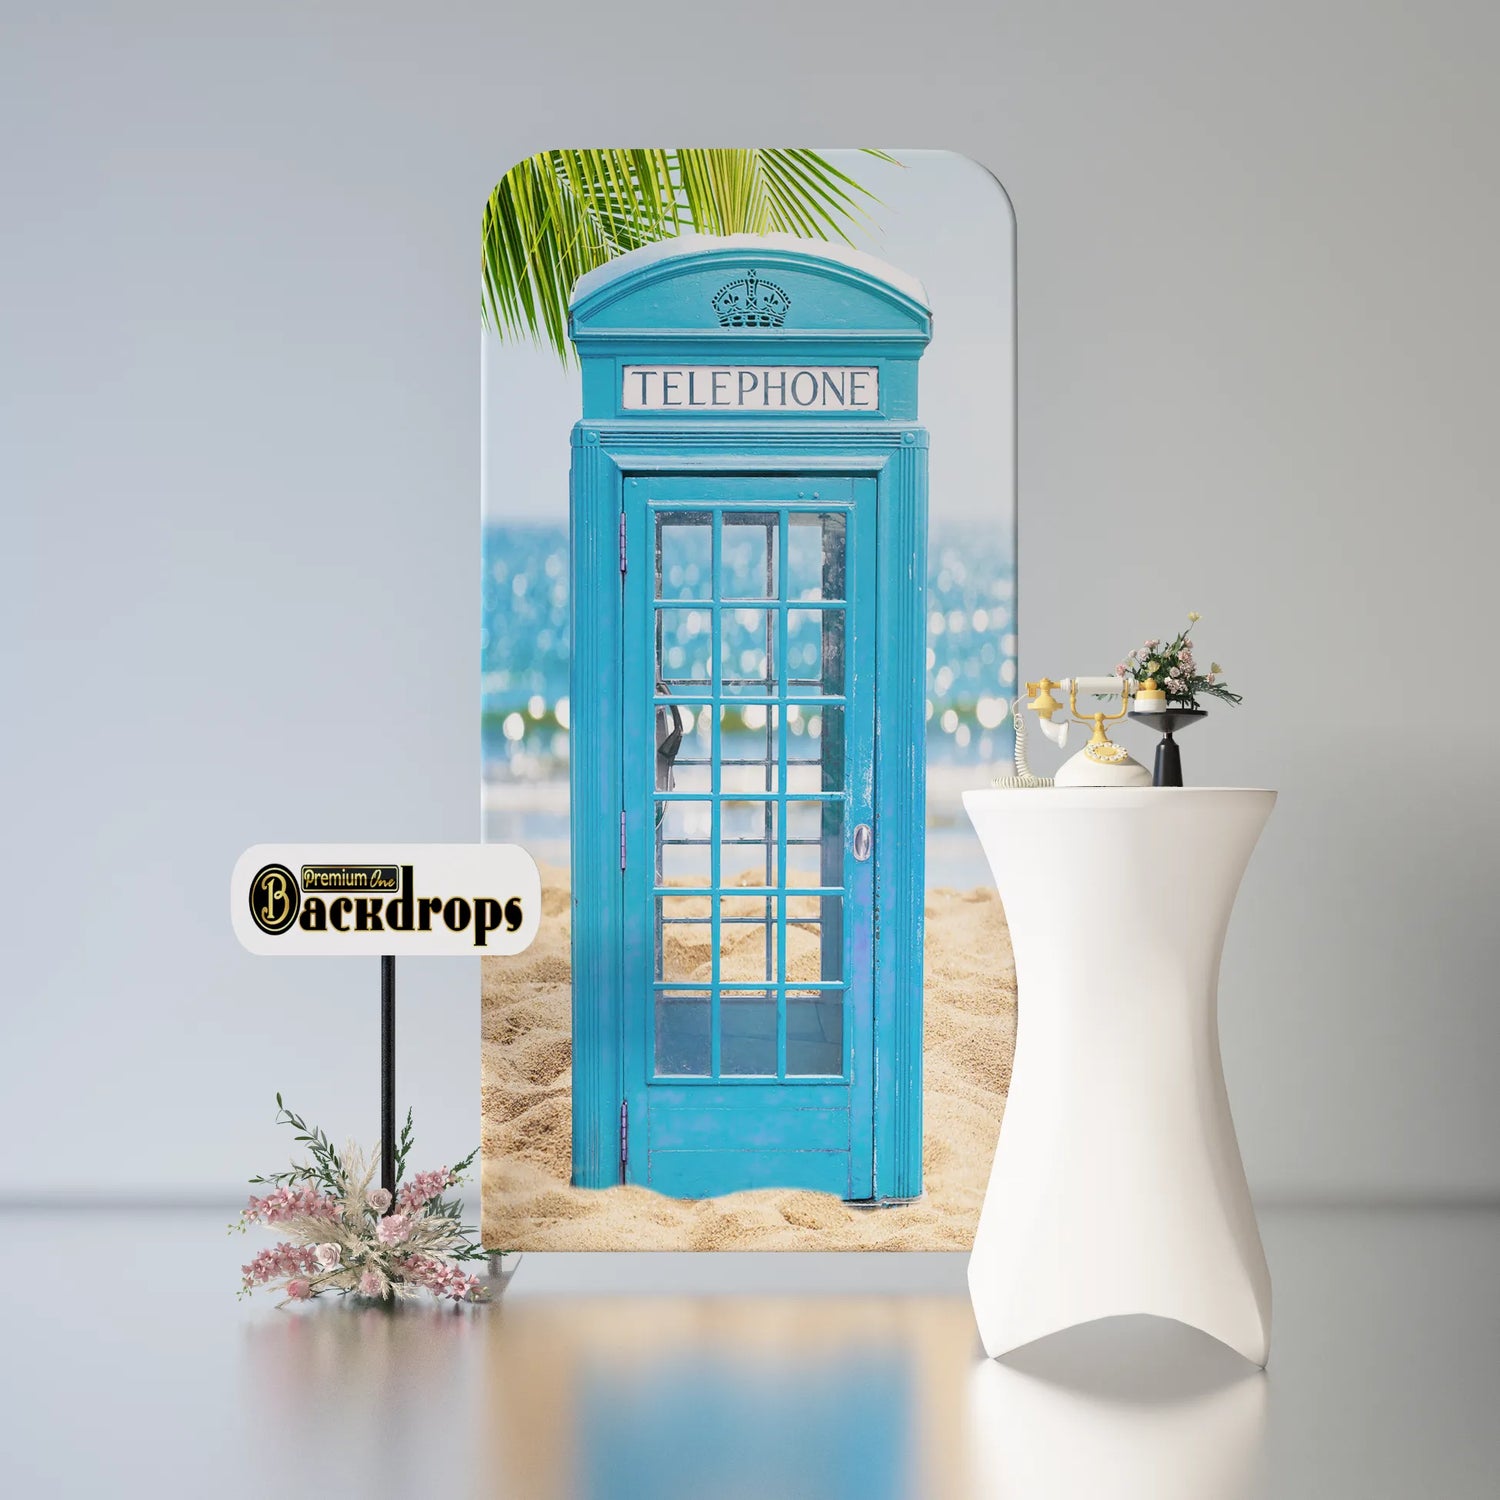 Telephone Booth Design 32